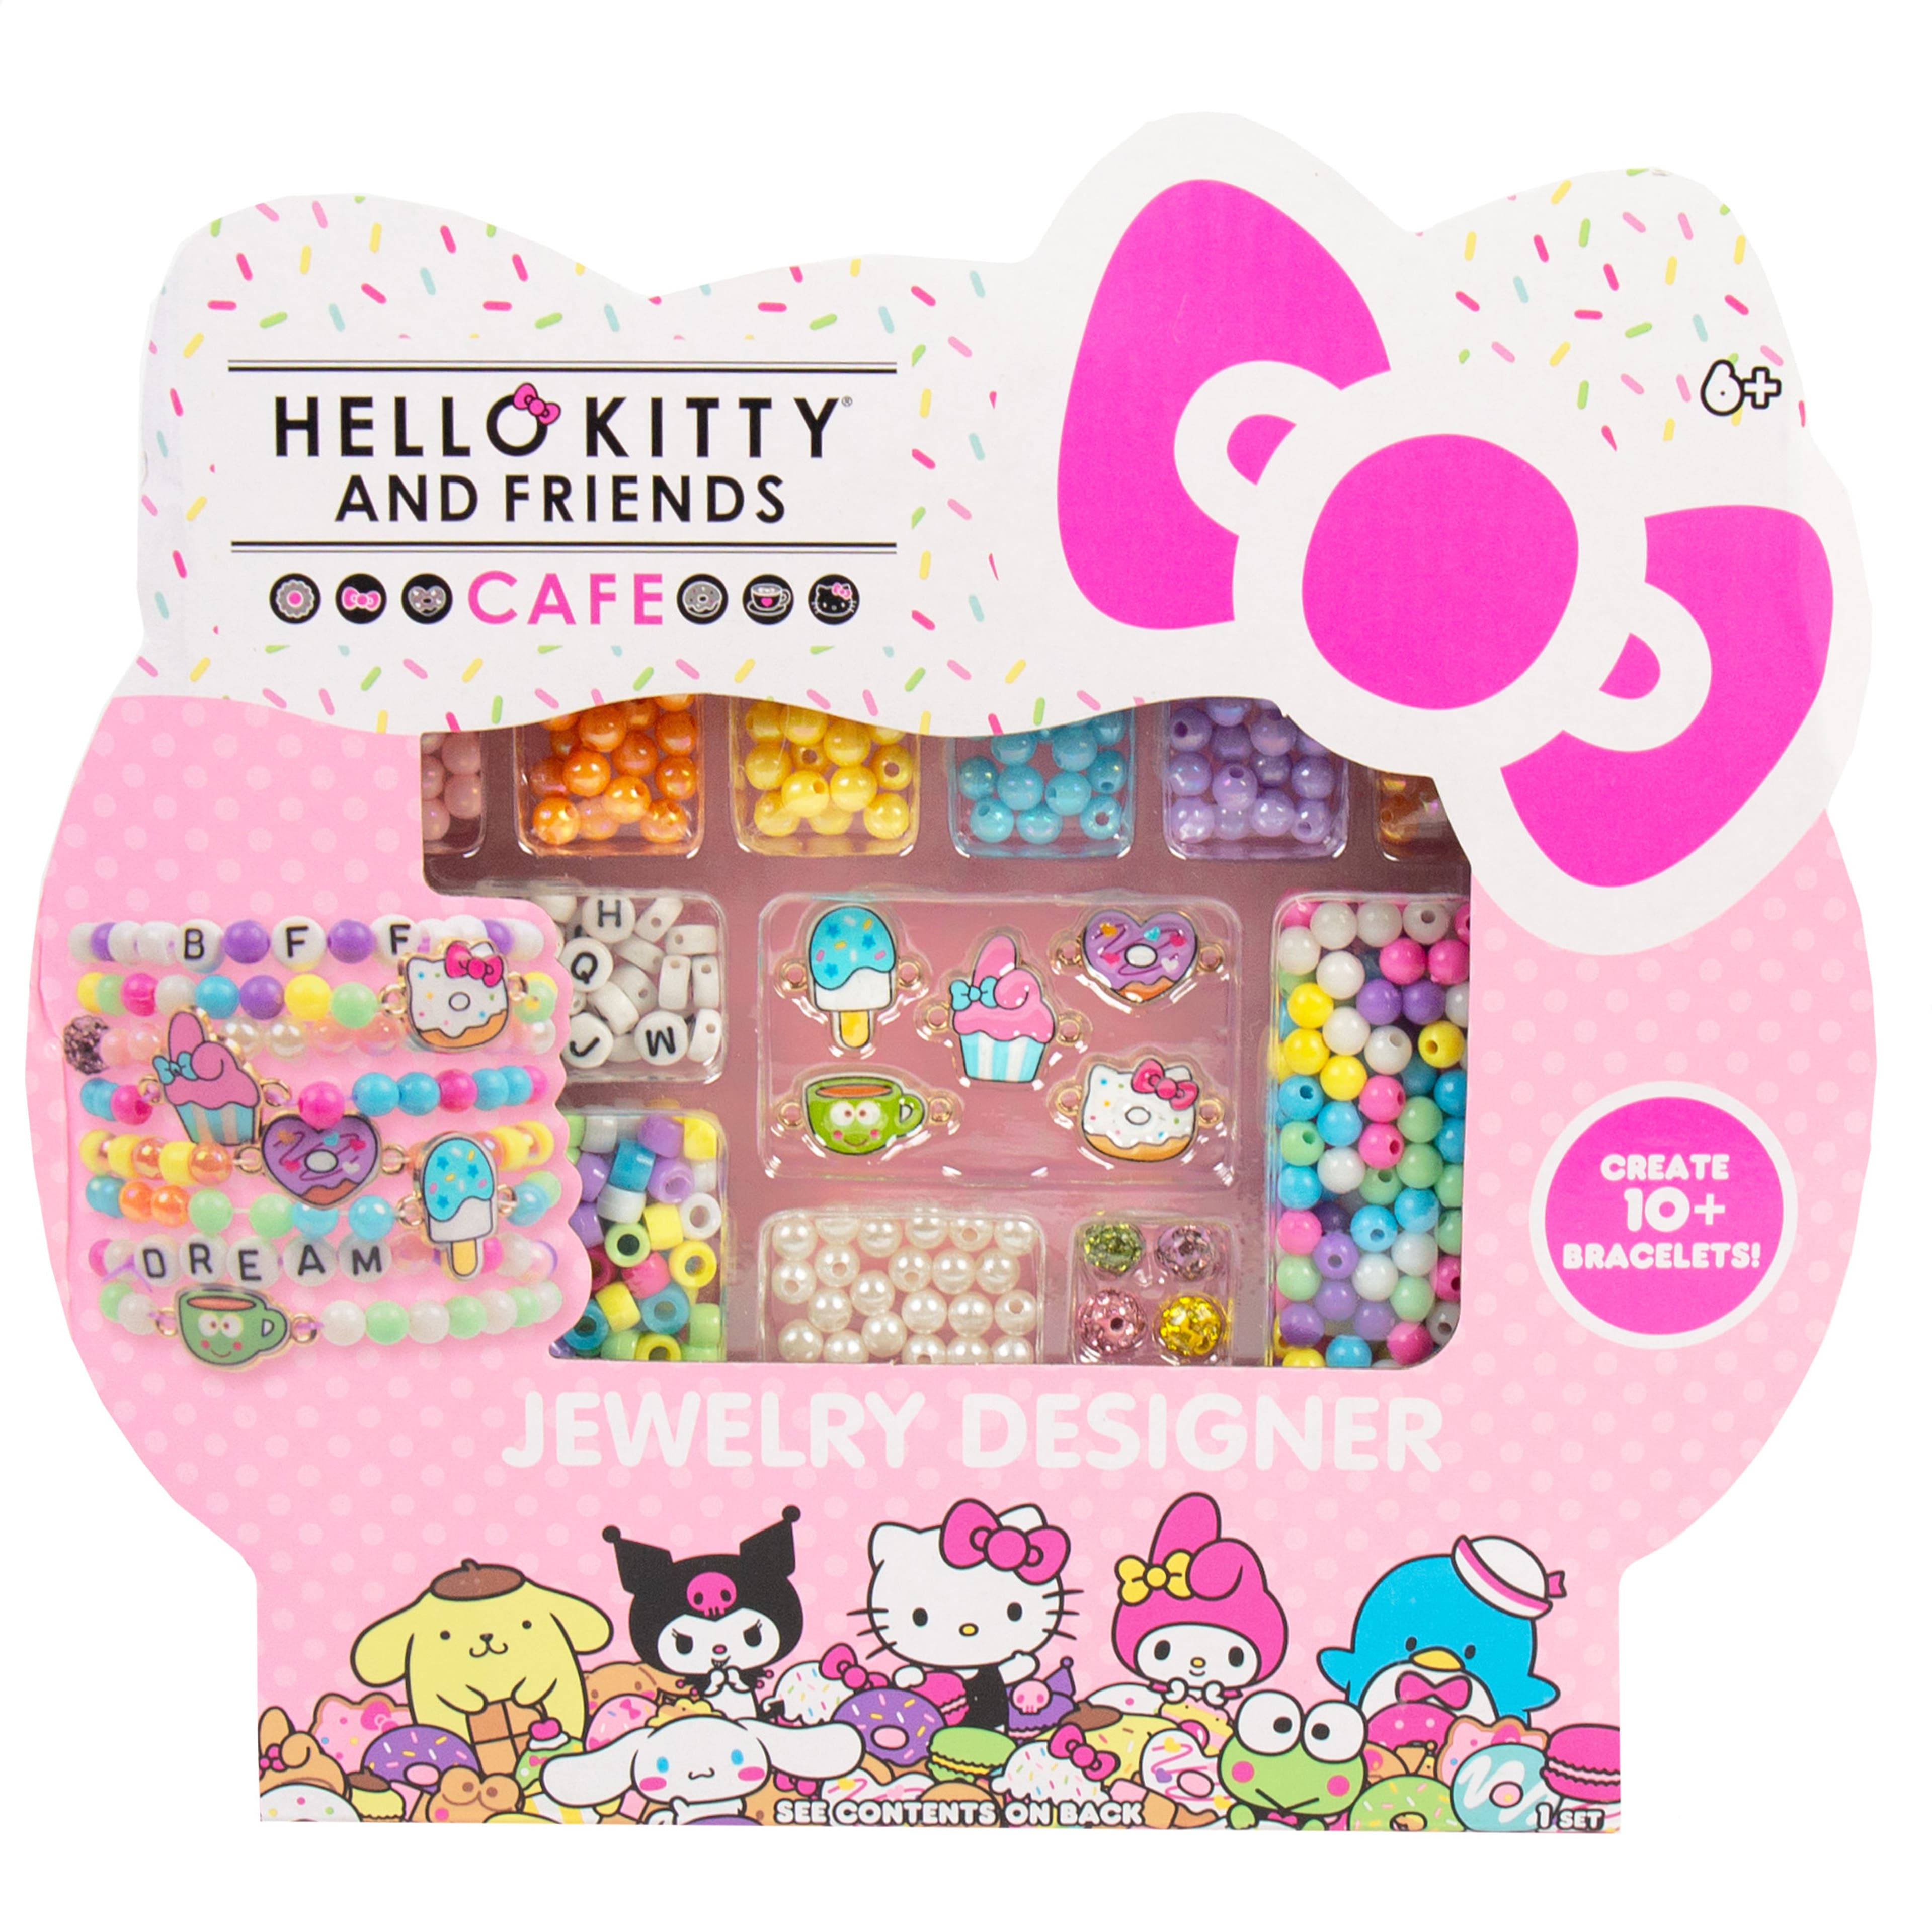 Hello Kitty Paint Your Own Jewelry Kit. Hello Kitty Jewelry Dish. Sanrio  Jewelry